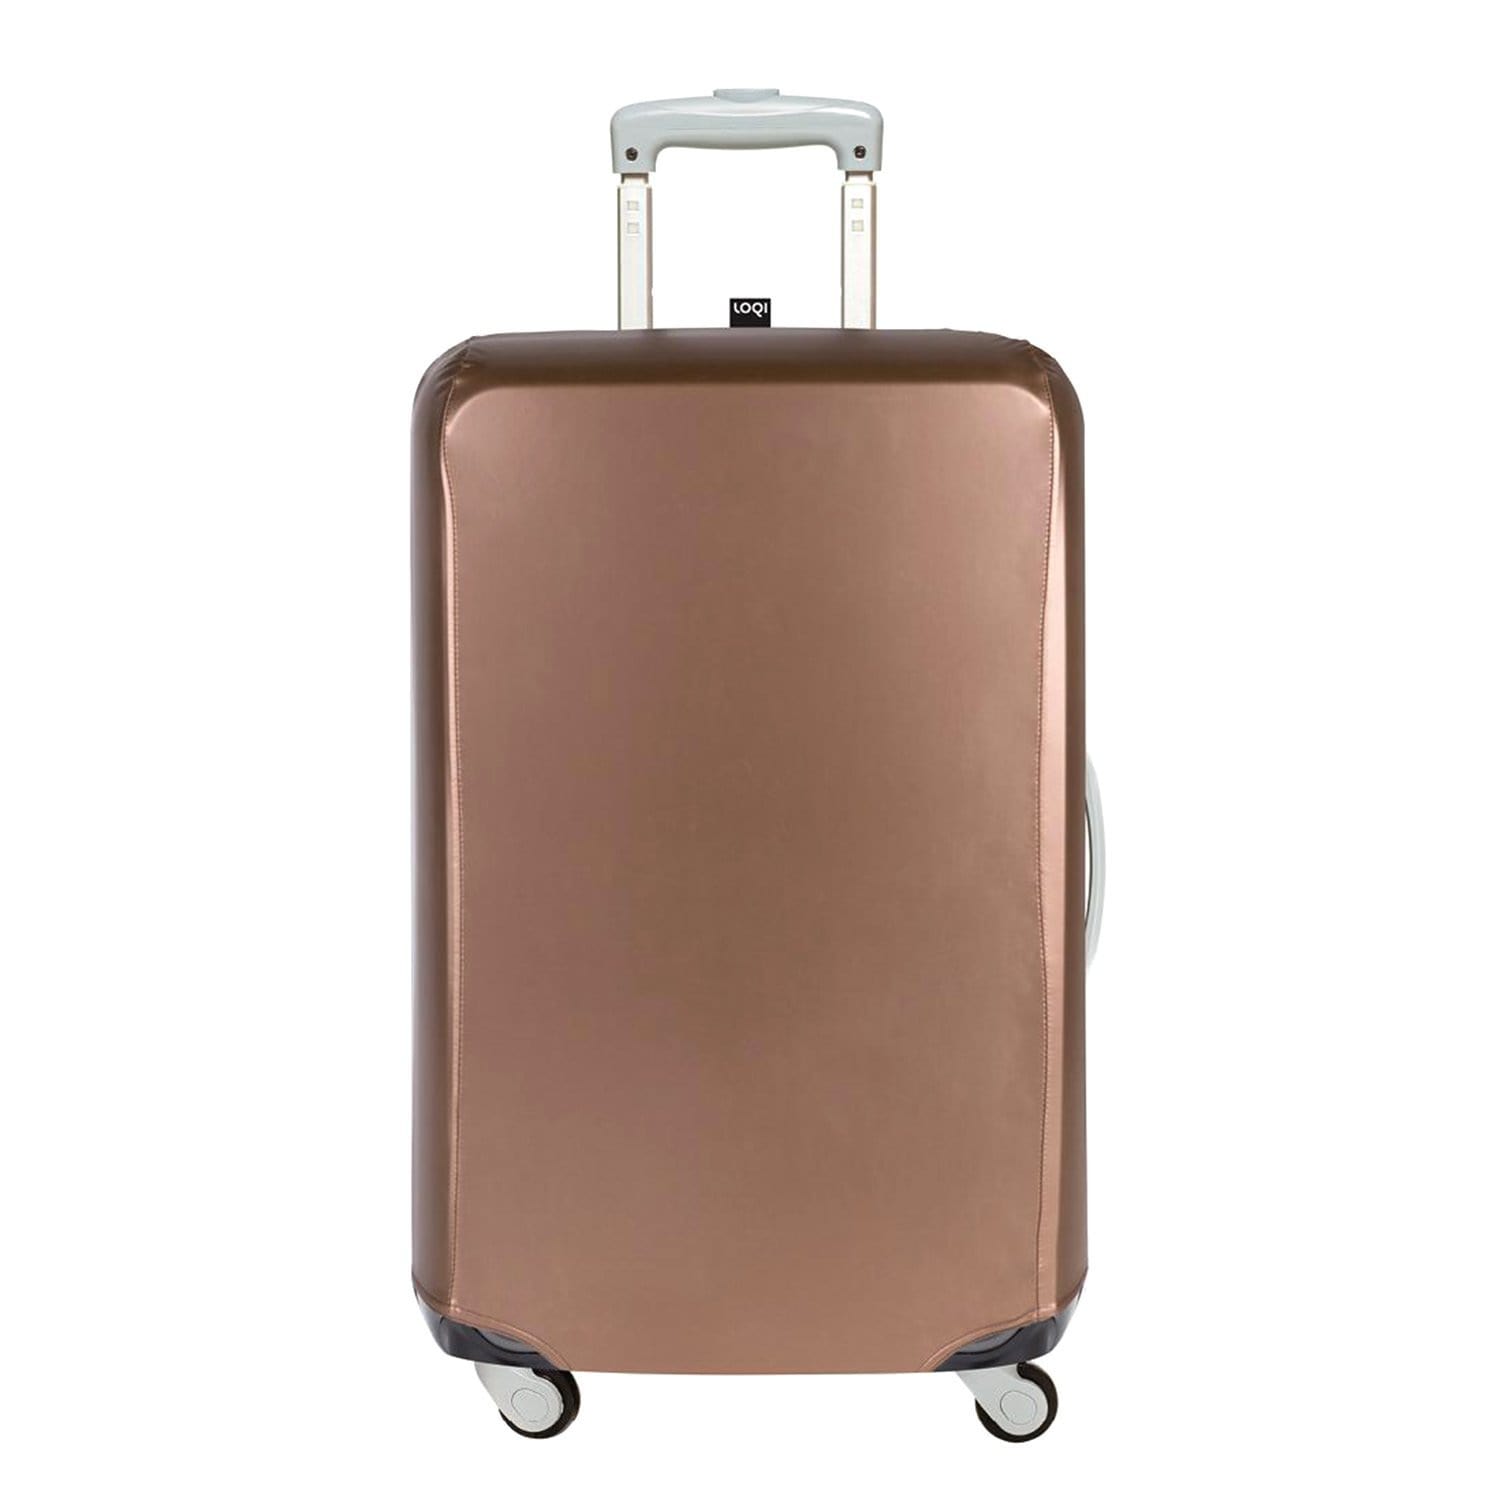 Loqi Luggage Cover - Metallic Rose Gold, Large - LL ME RO - Jashanmal Home